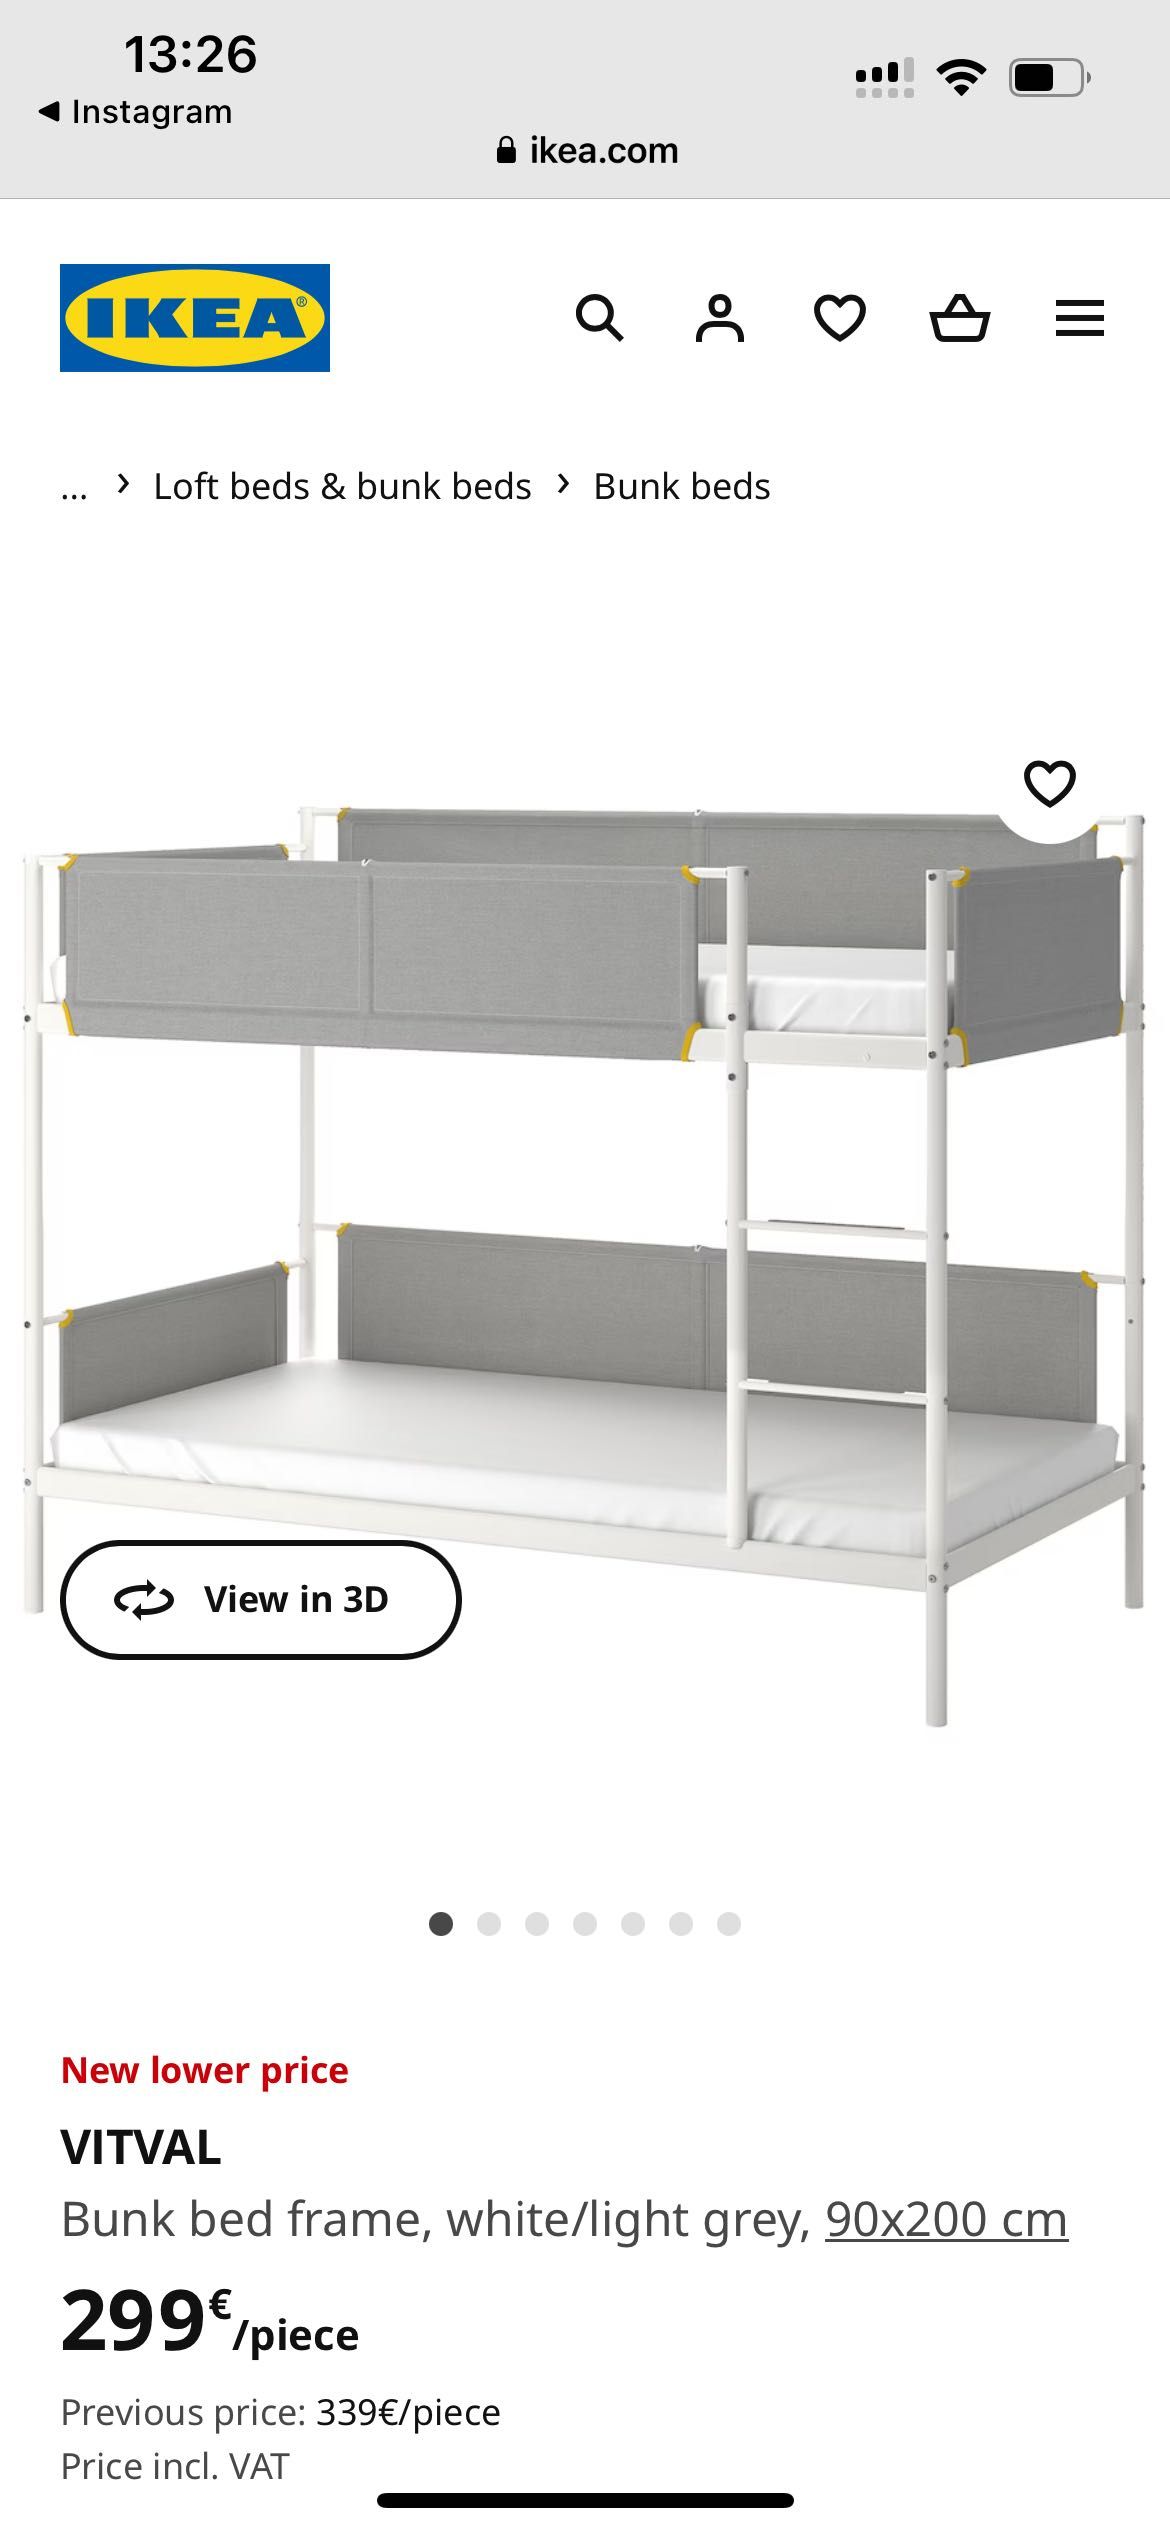 Bunk bed frame, white/light grey, 90x200 cm